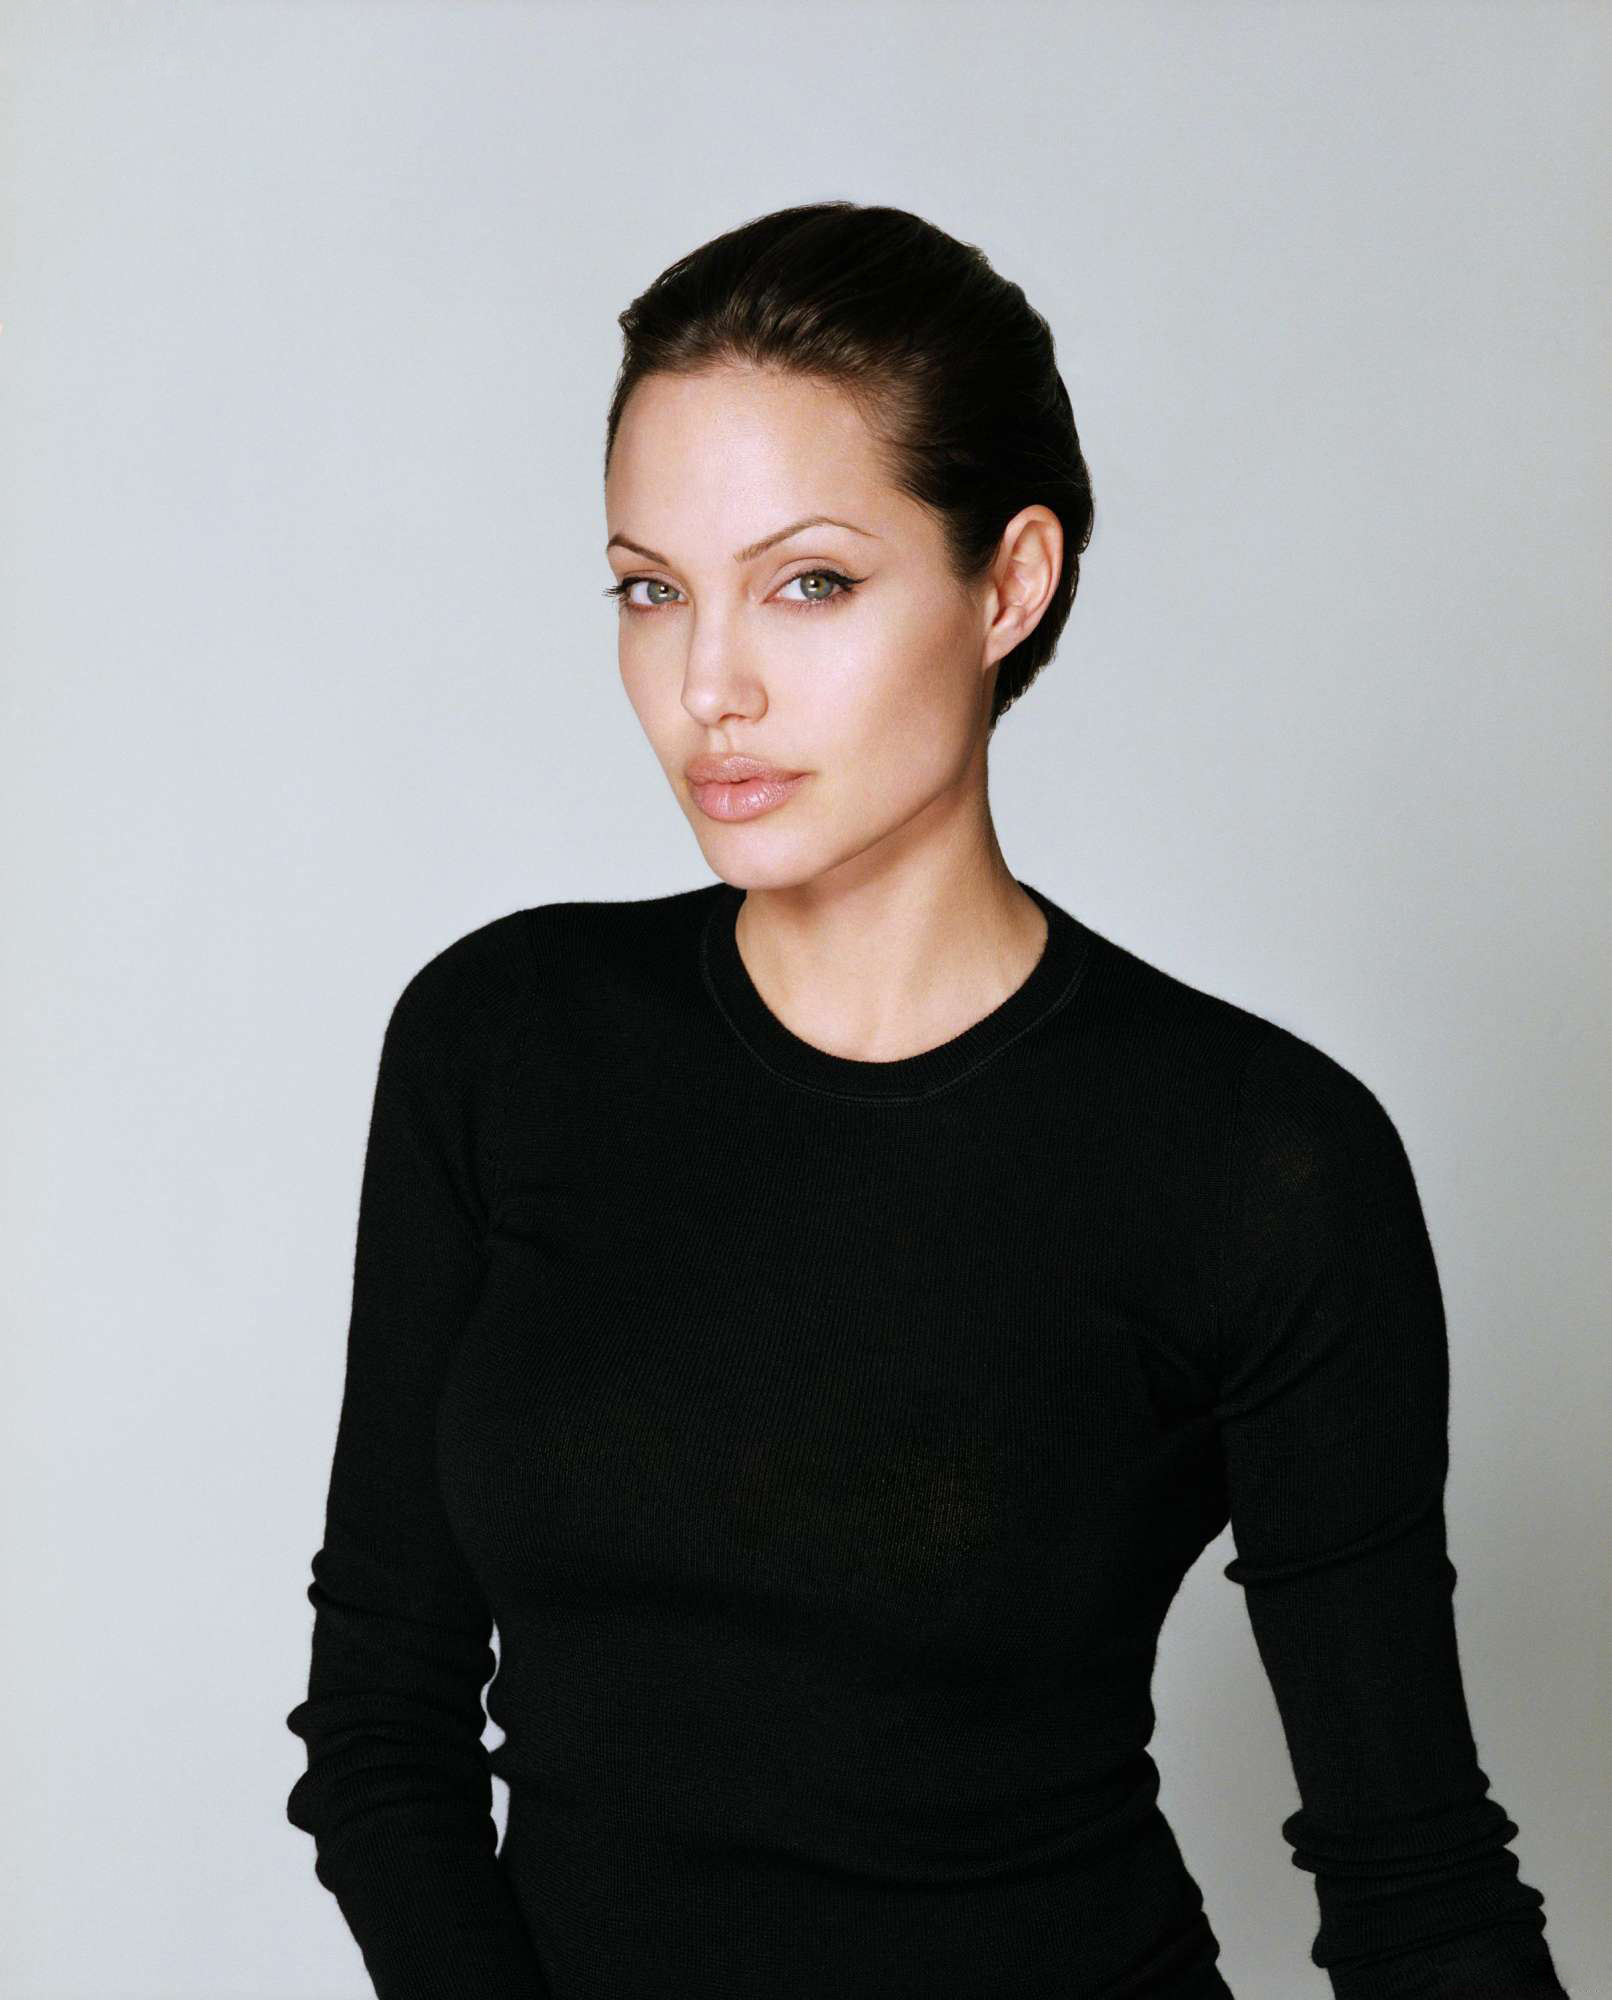 Angelina Jolie - NSFW, Angelina Jolie, Actors and actresses, Erotic, Longpost, Breast, Boobs